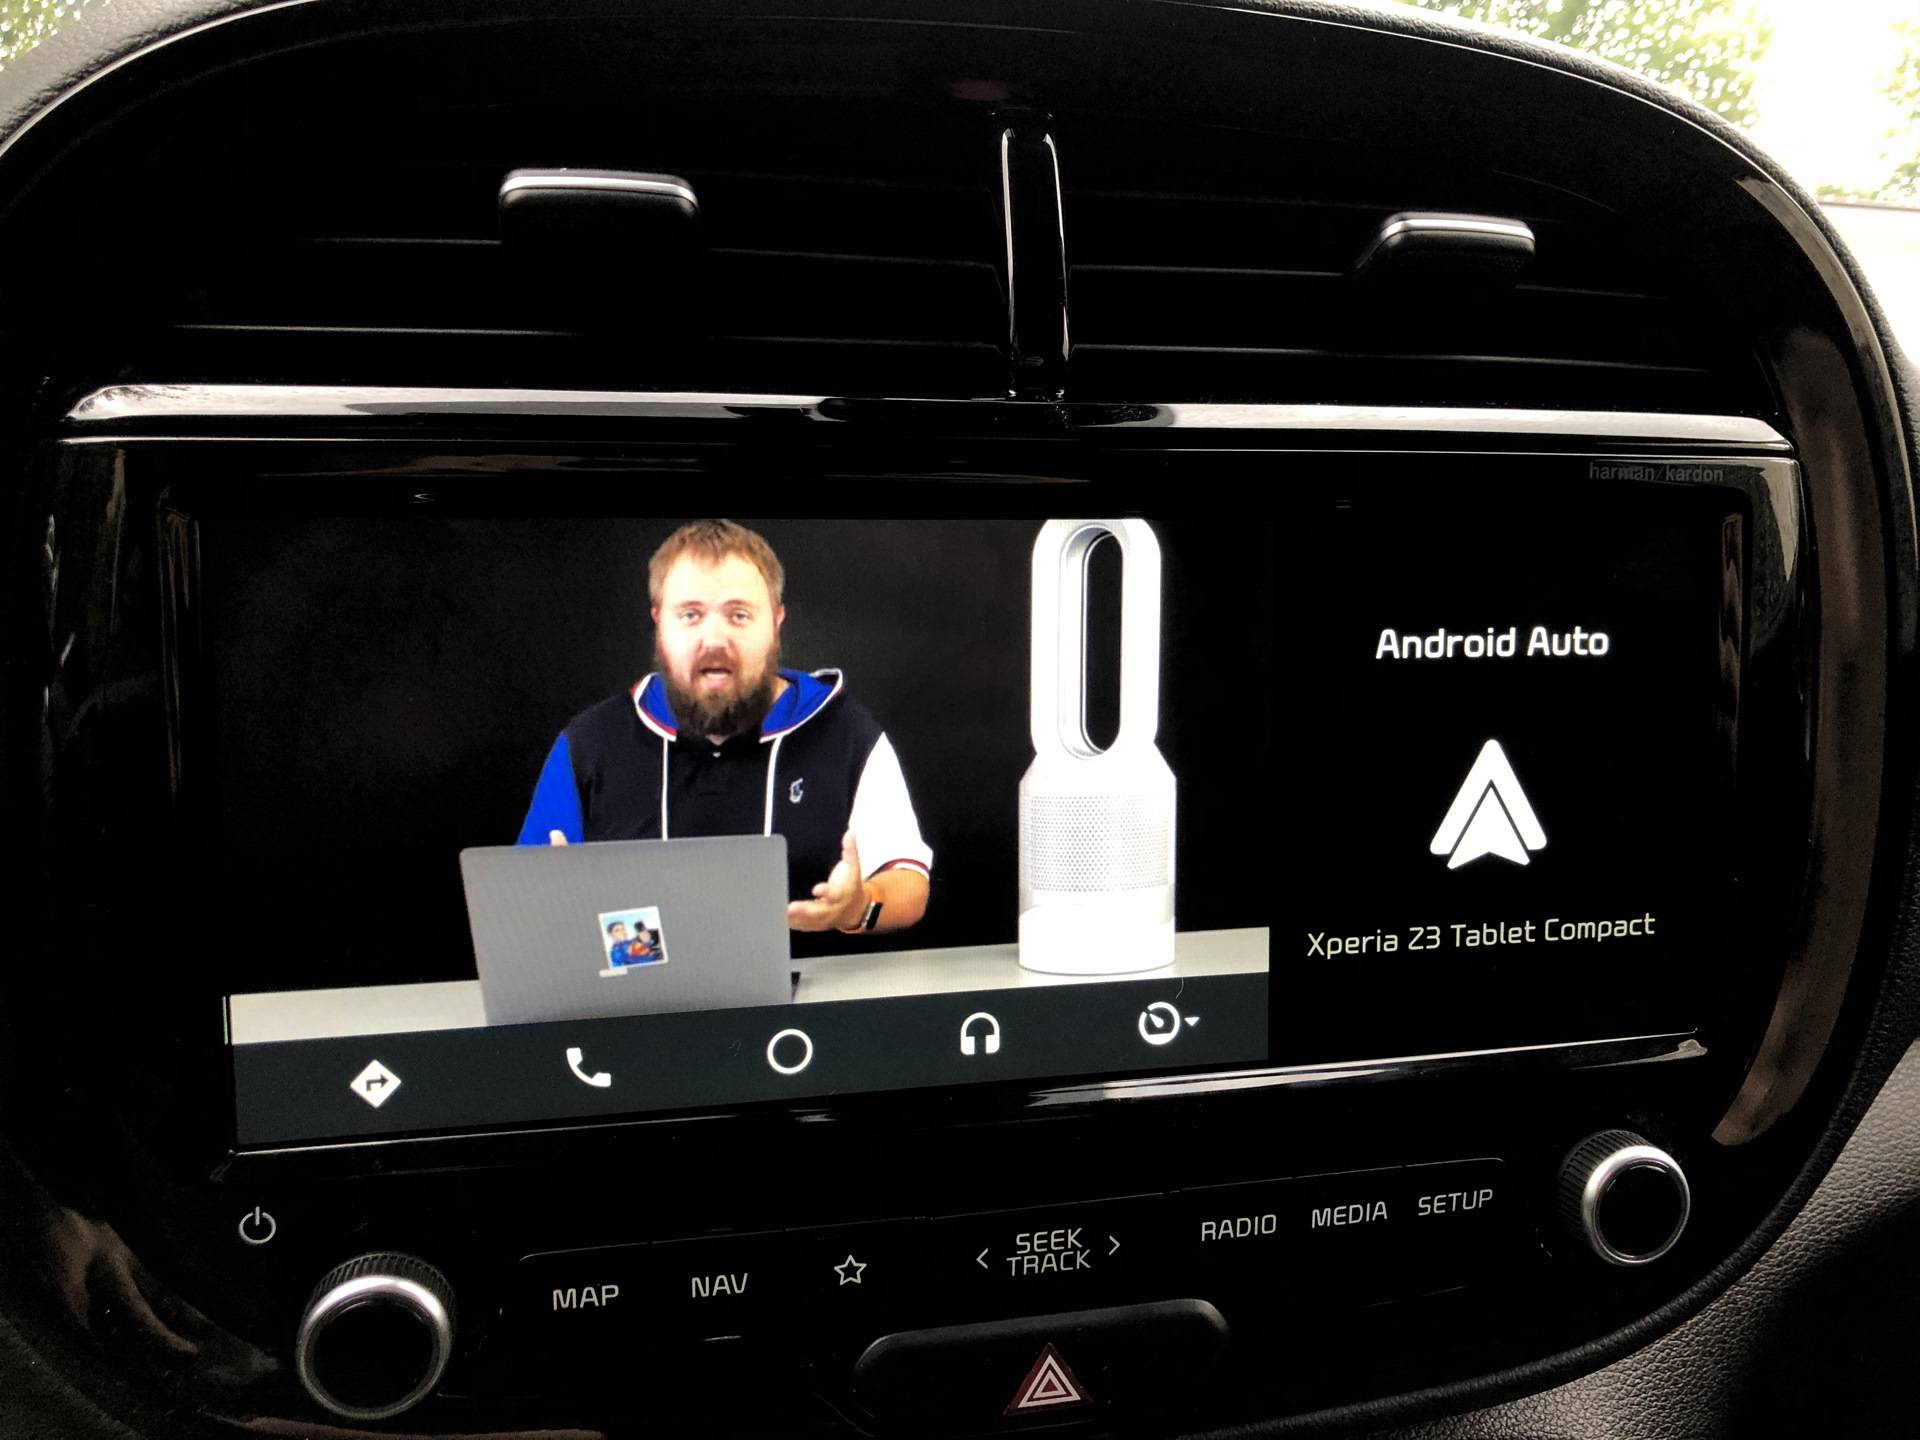 Видео приложения андроид авто. CARSTREAM auto для Android auto. Магнитола Харман Кардон. Андроид авто последняя версия. Беспроводной Android auto.